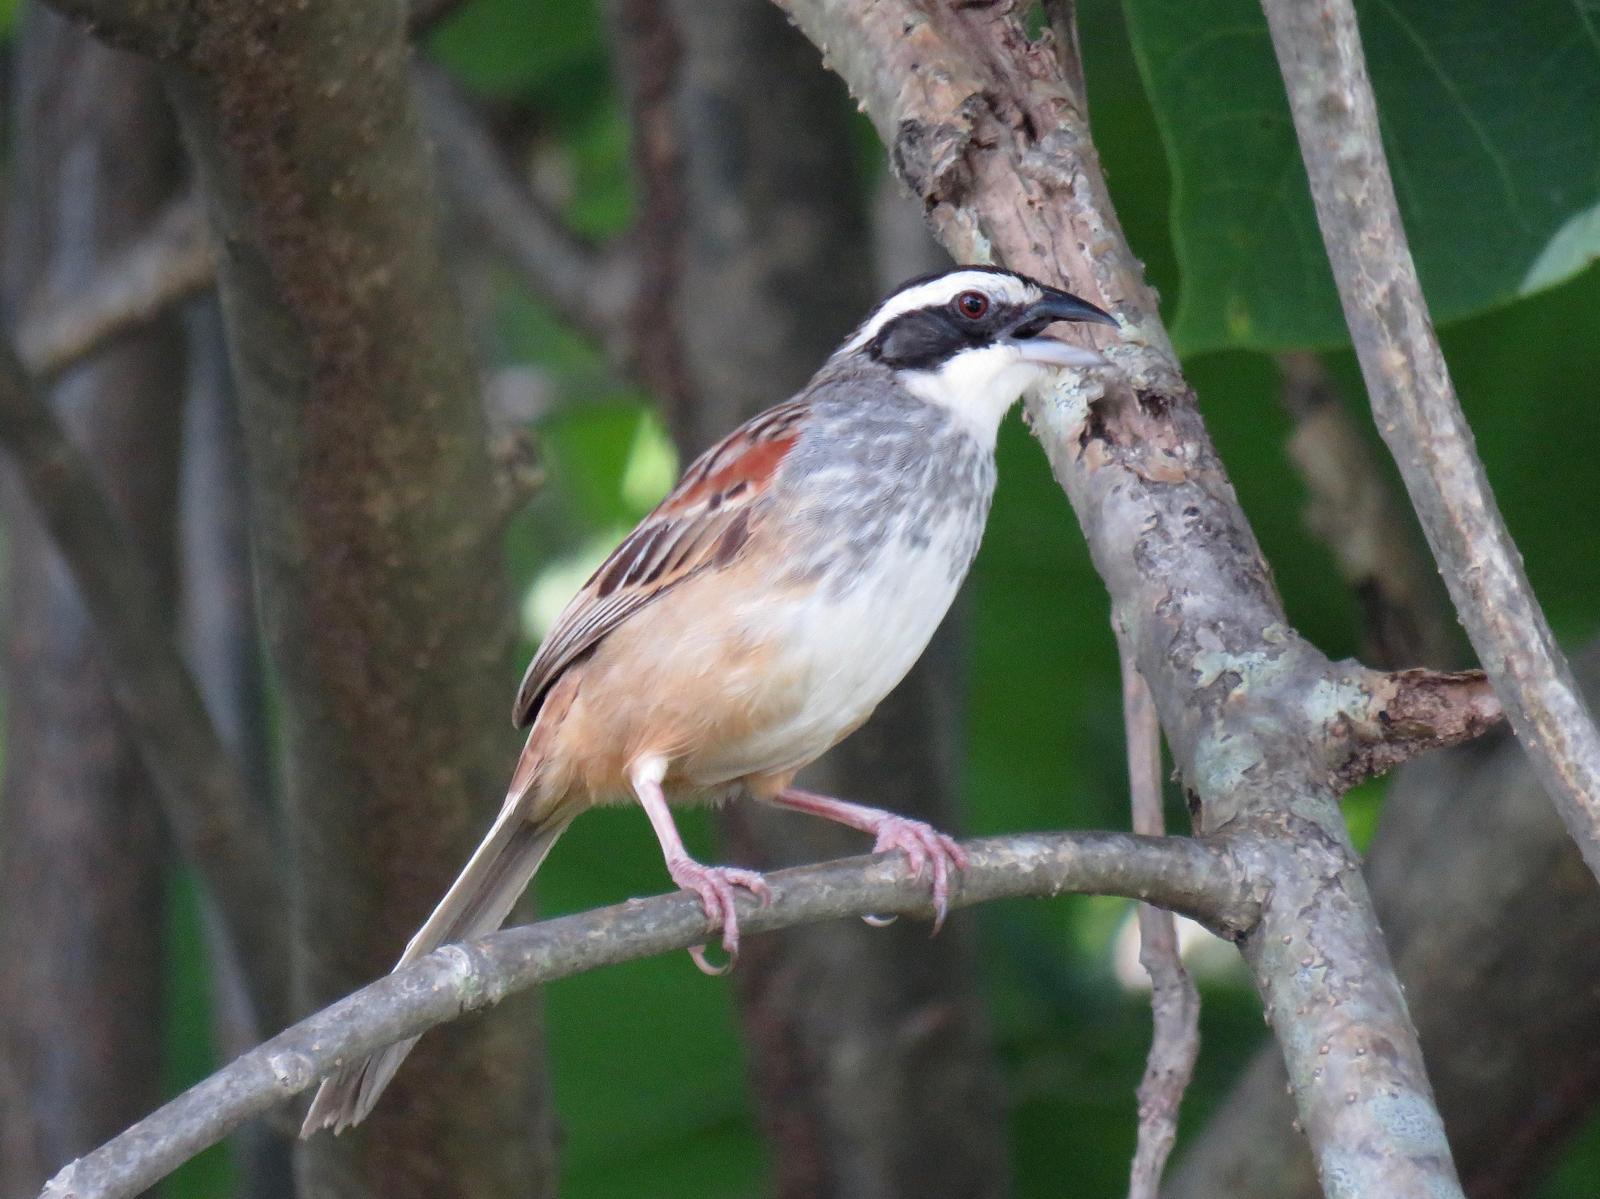 Stripe-headed Sparrow Photo by John van Dort